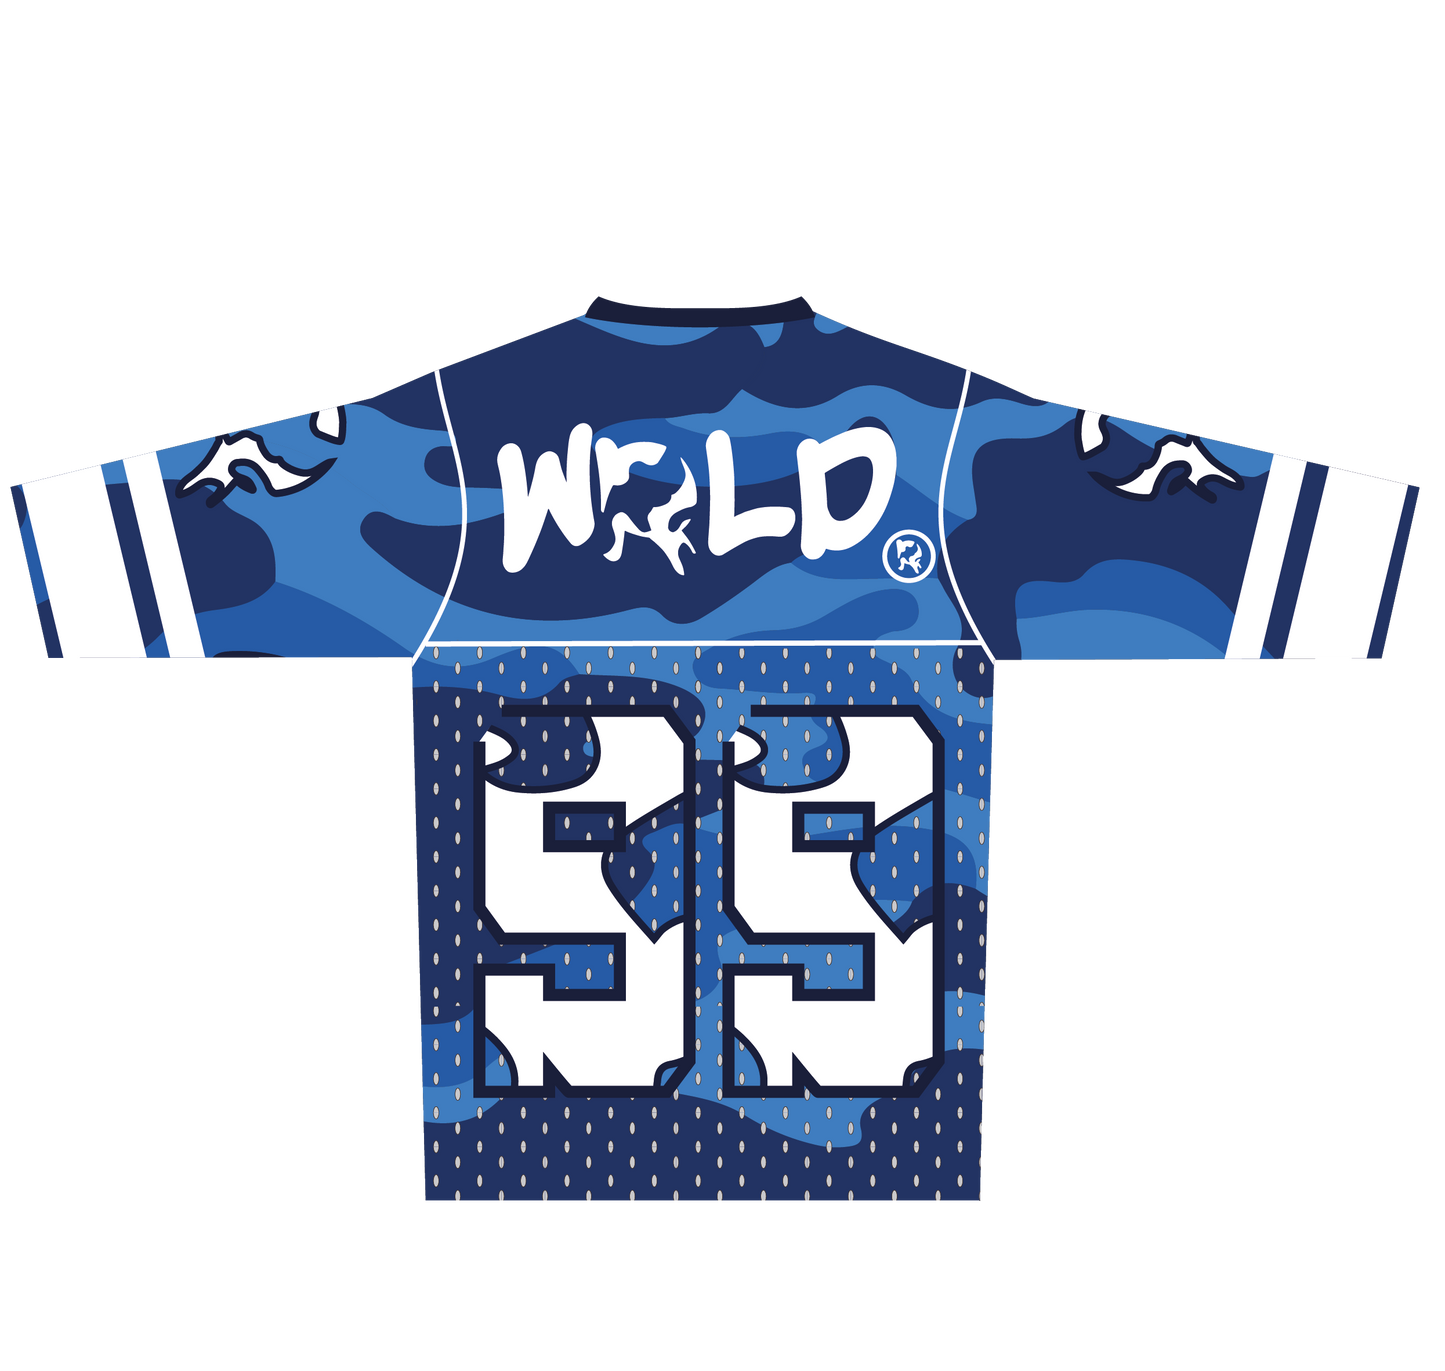 WRLD NFL JERSEY "BLUE CAMO"